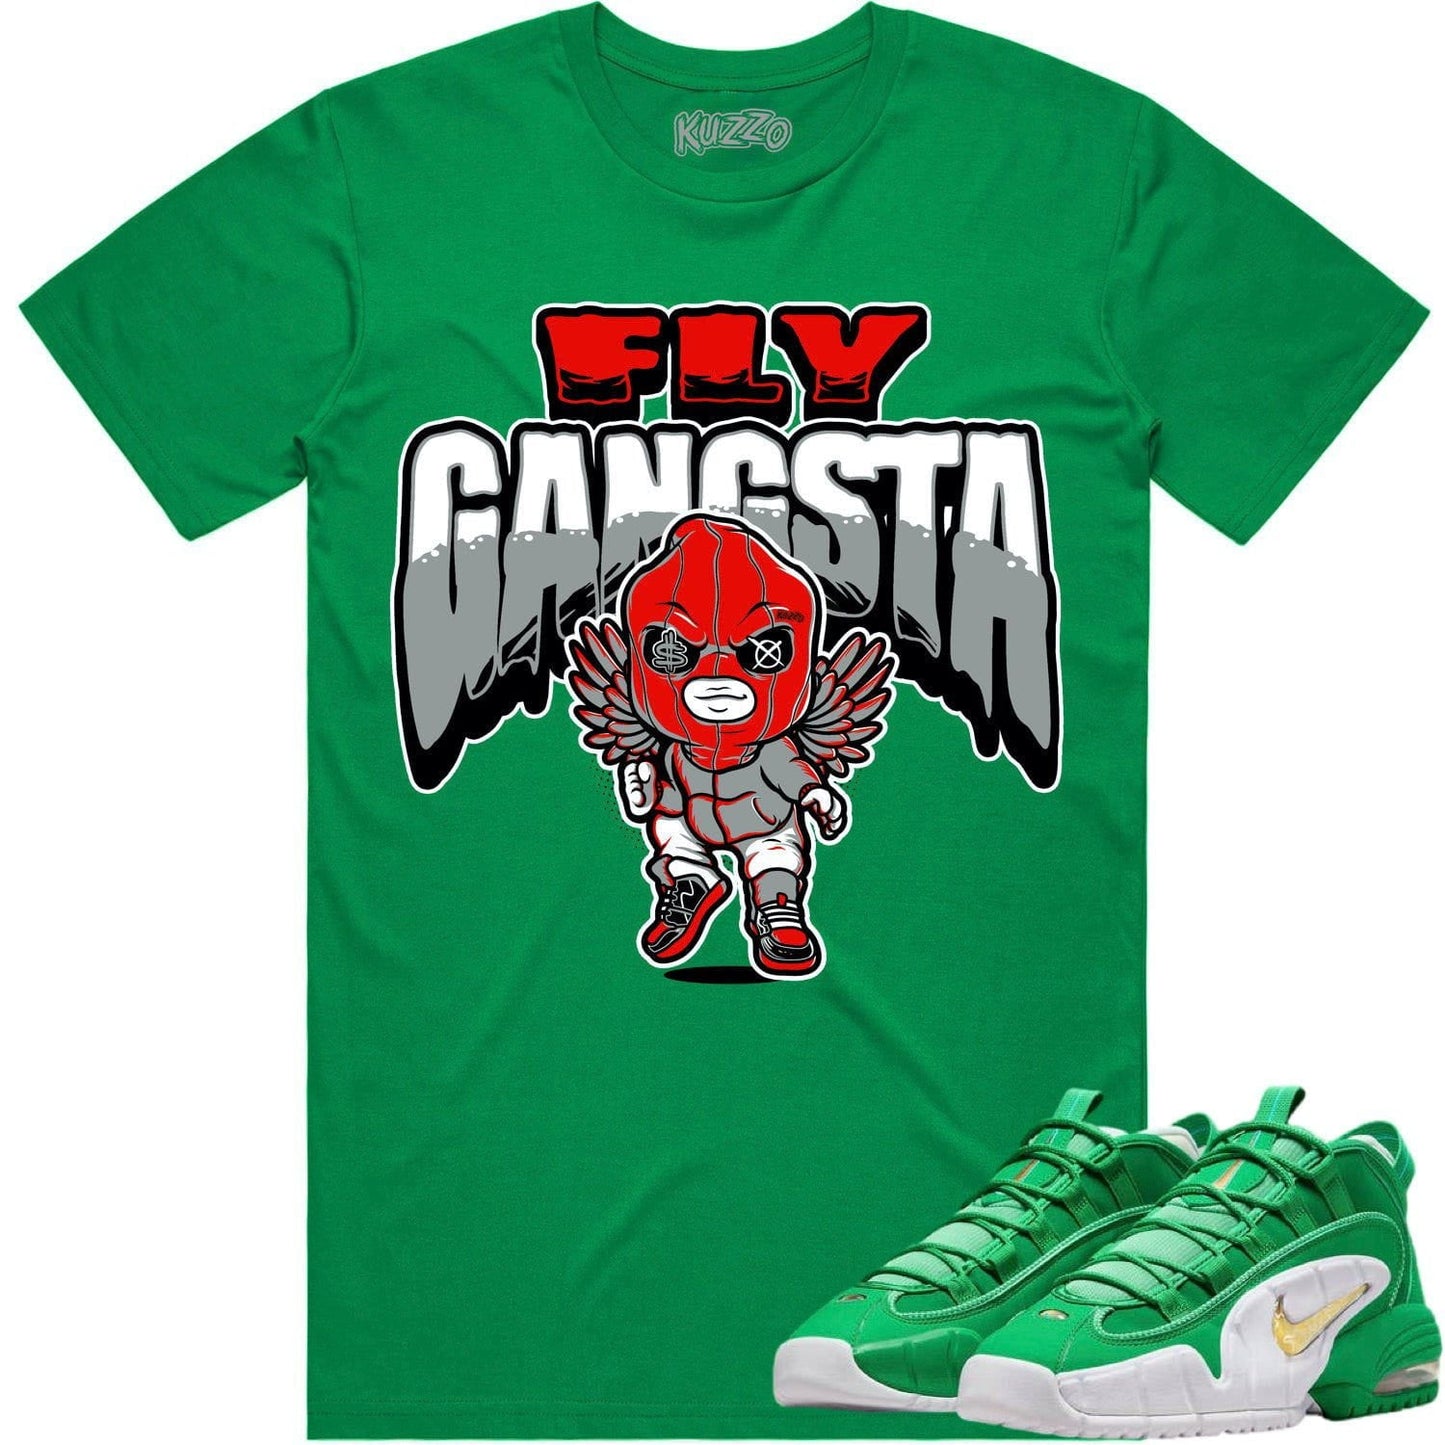 Penny 1 Stadium Green 1s Shirt - Sneaker Tees - Red Fly Gangsta